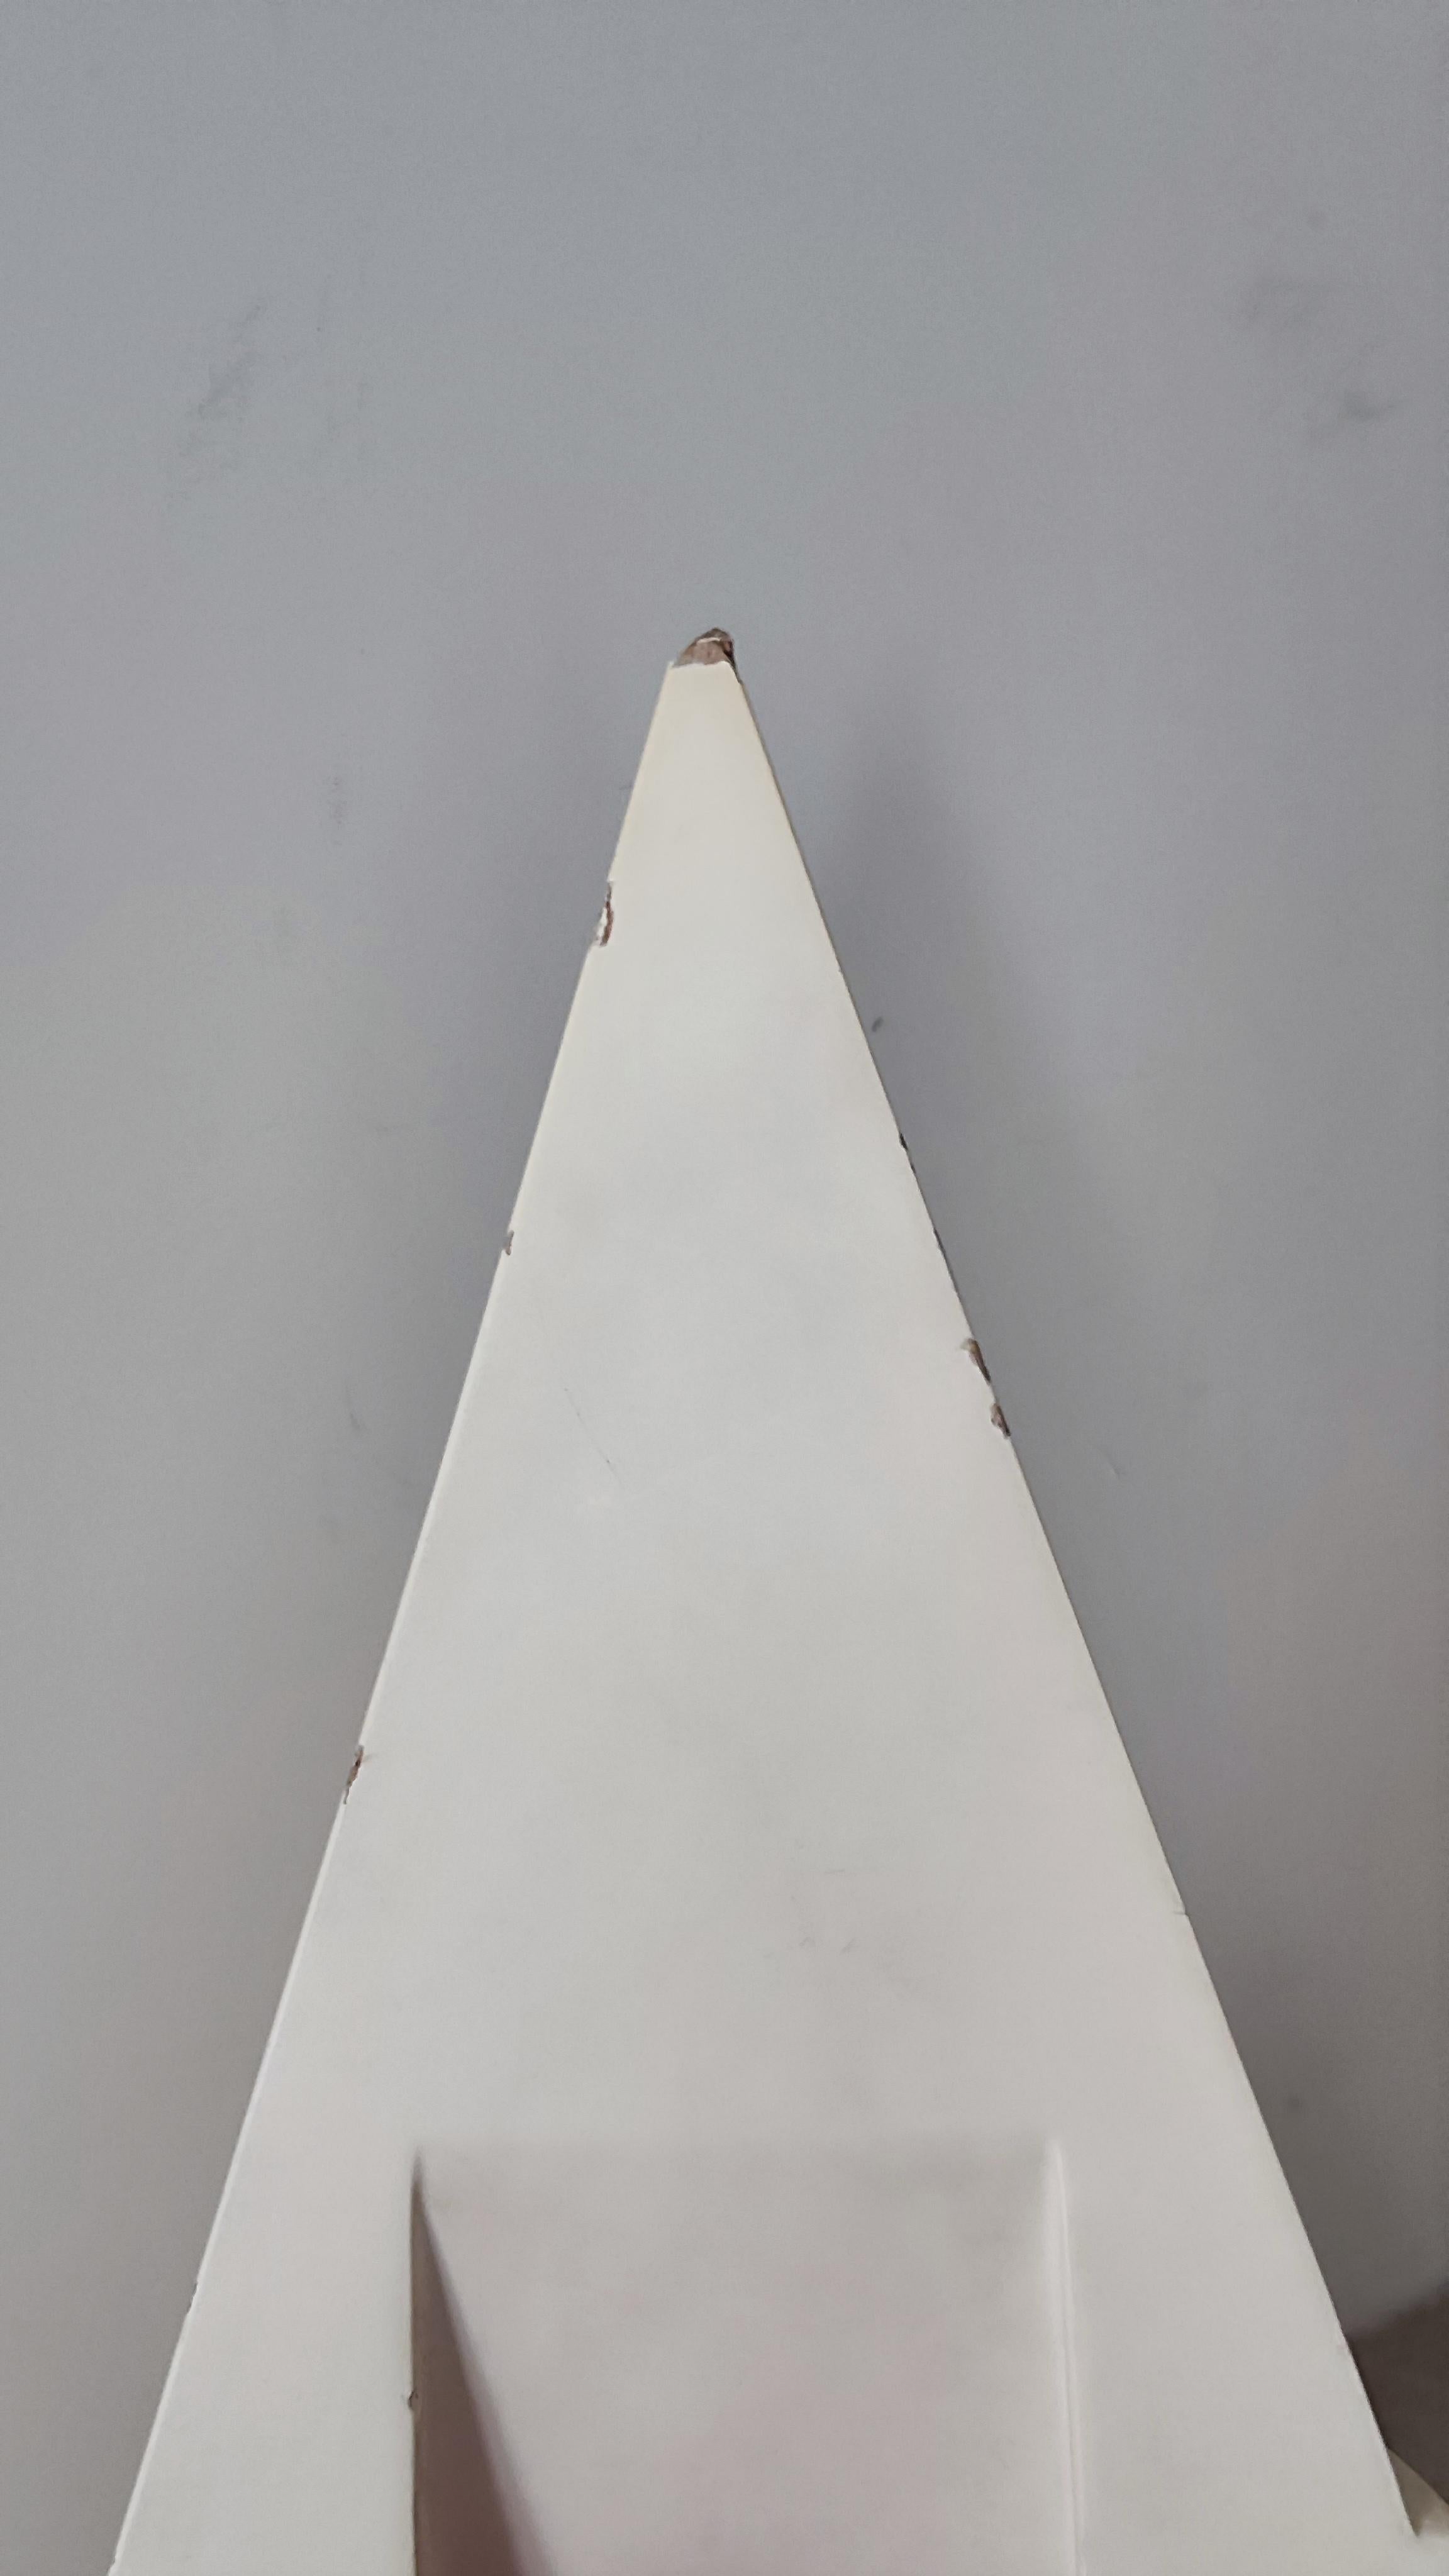 Abstrakte postmoderne polychrome Pyramidenskulptur Memphis 1980, Holz – signiert  im Angebot 14